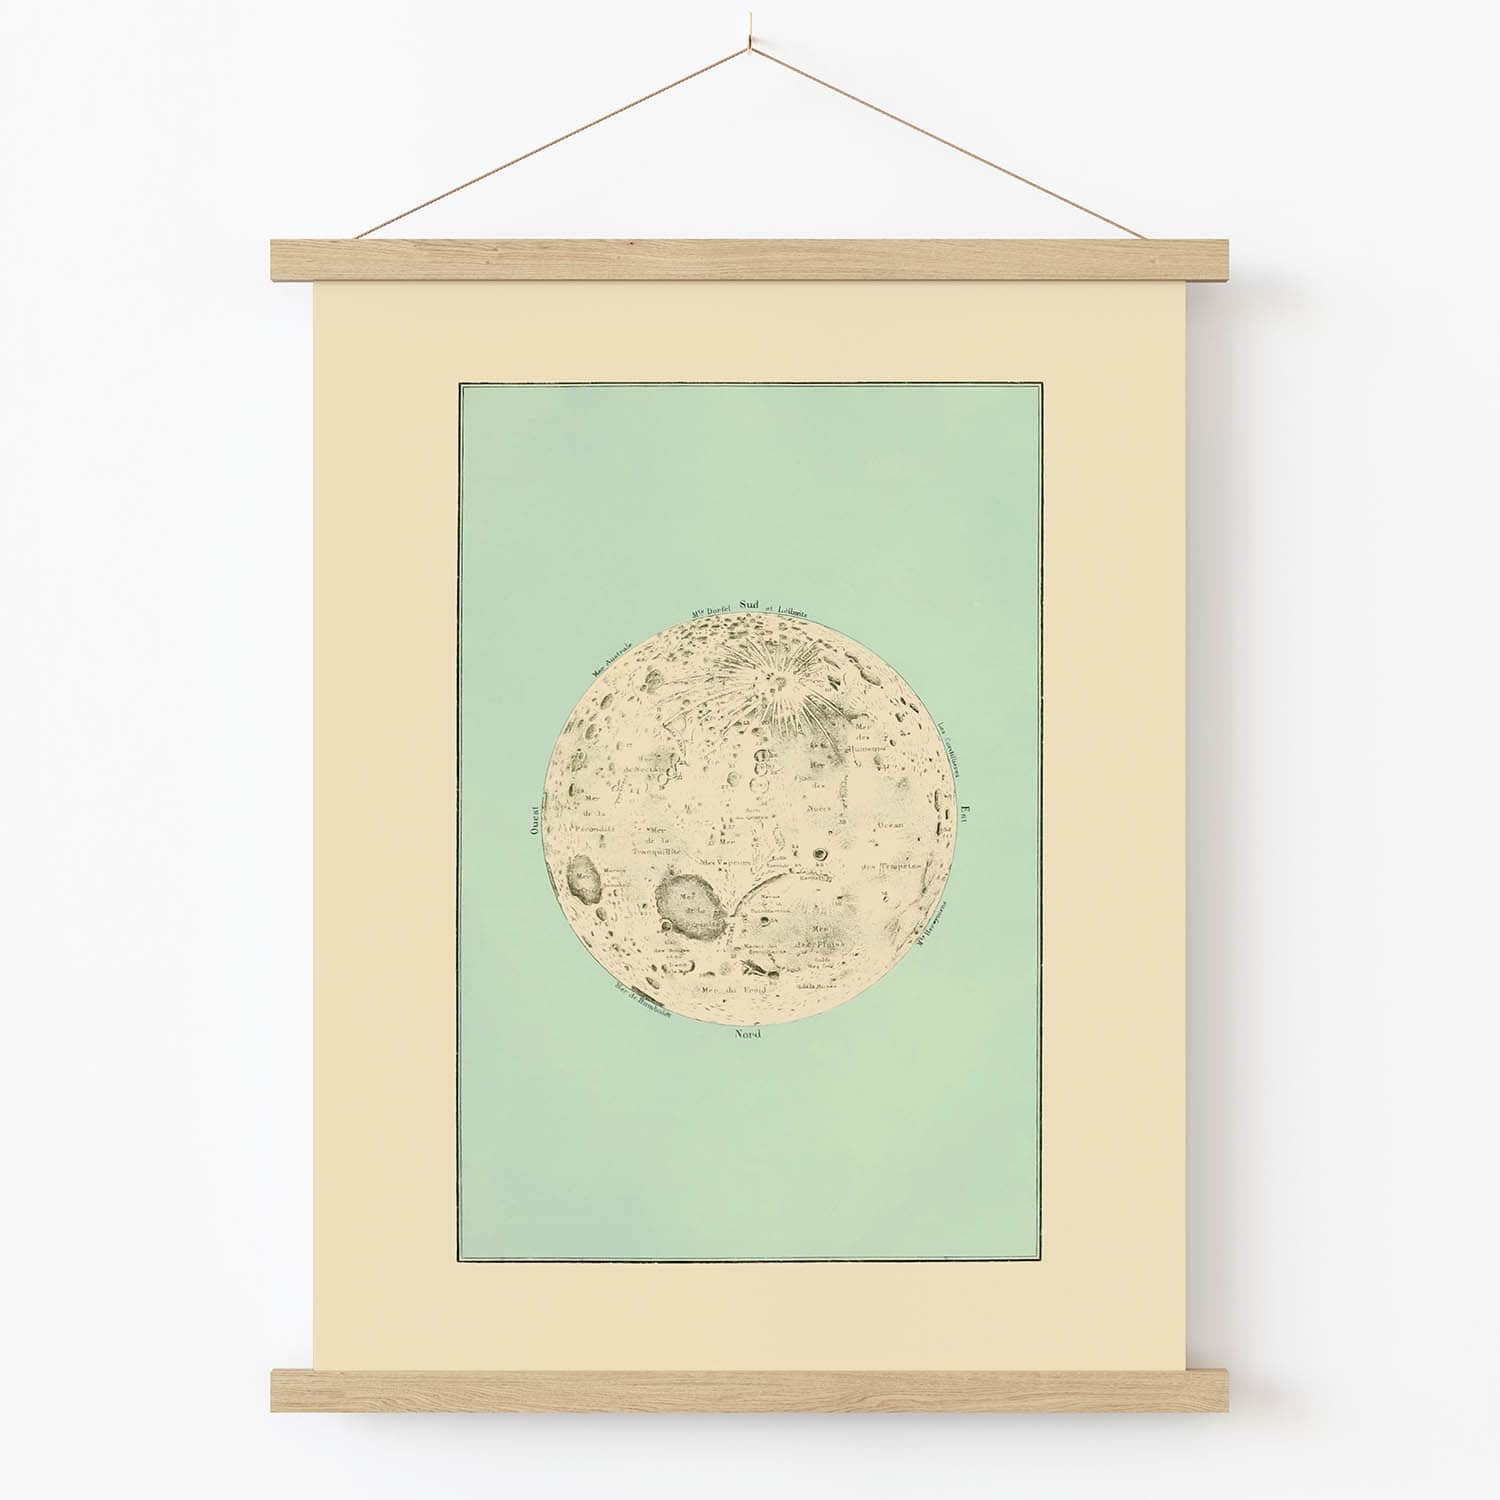 Teal Moon Art Print in Wood Hanger Frame on Wall